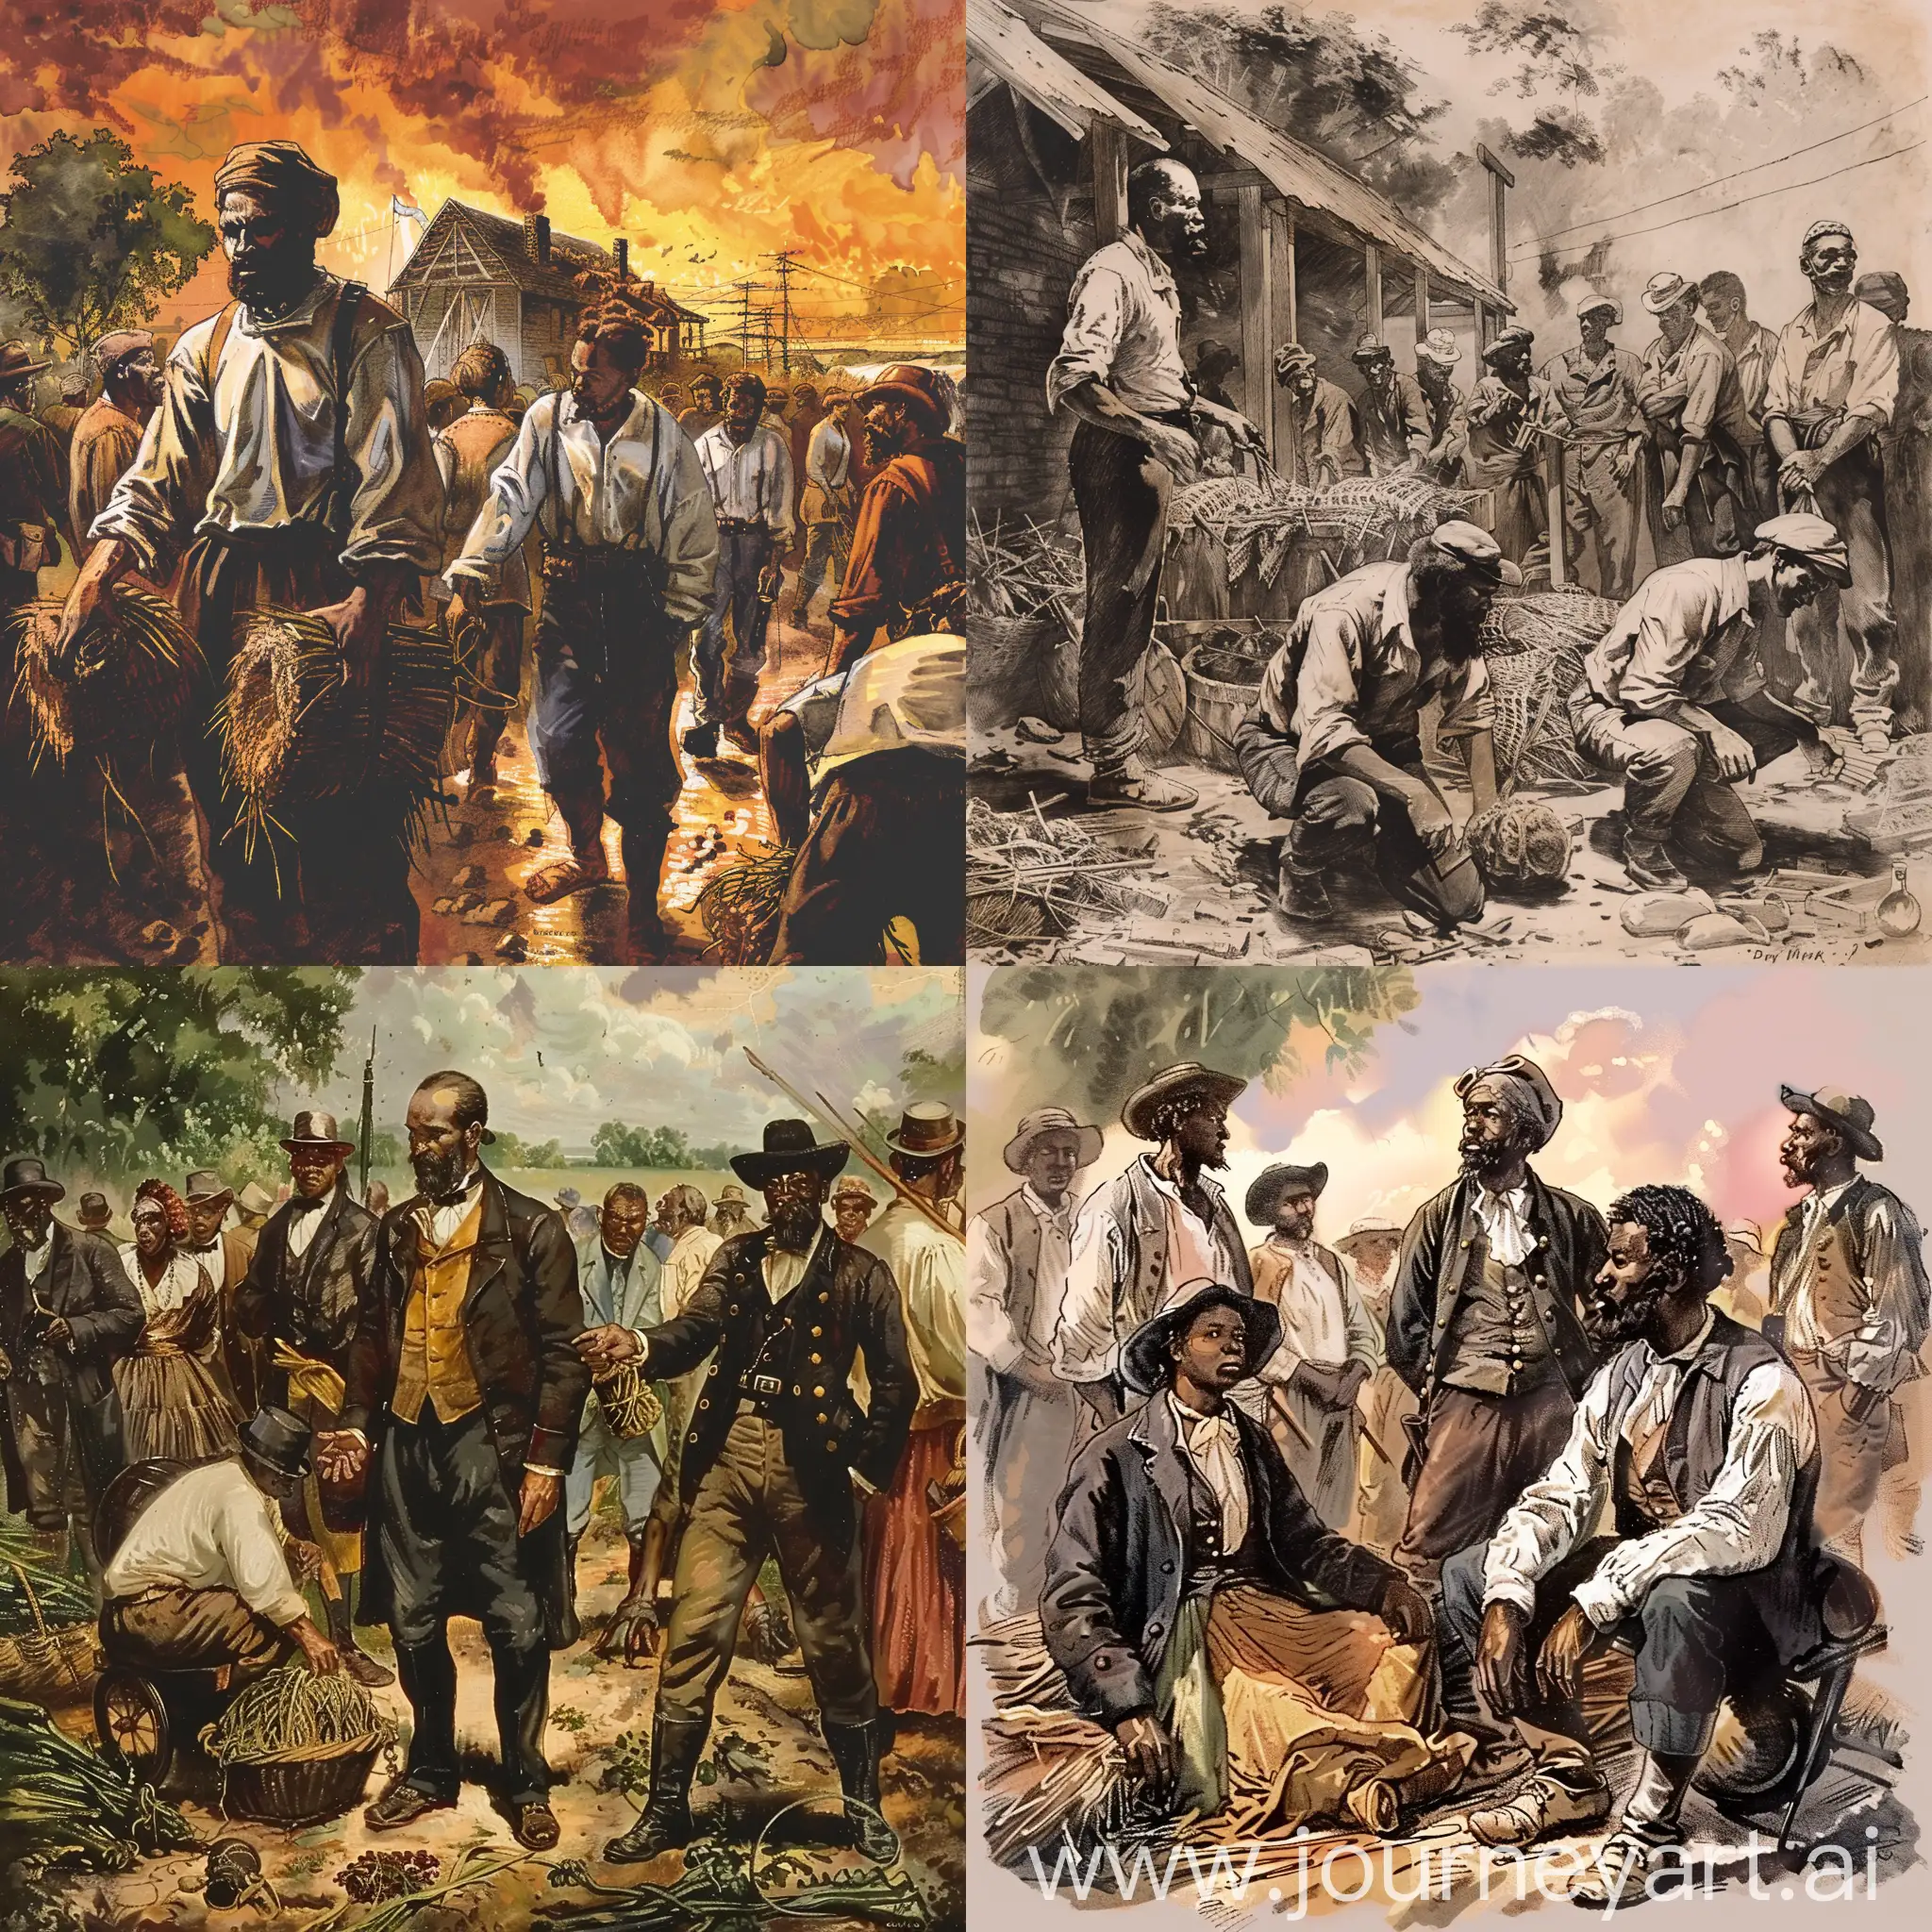 Human-Exploitation-Through-History-Depiction-of-Slavery-in-Various-Eras